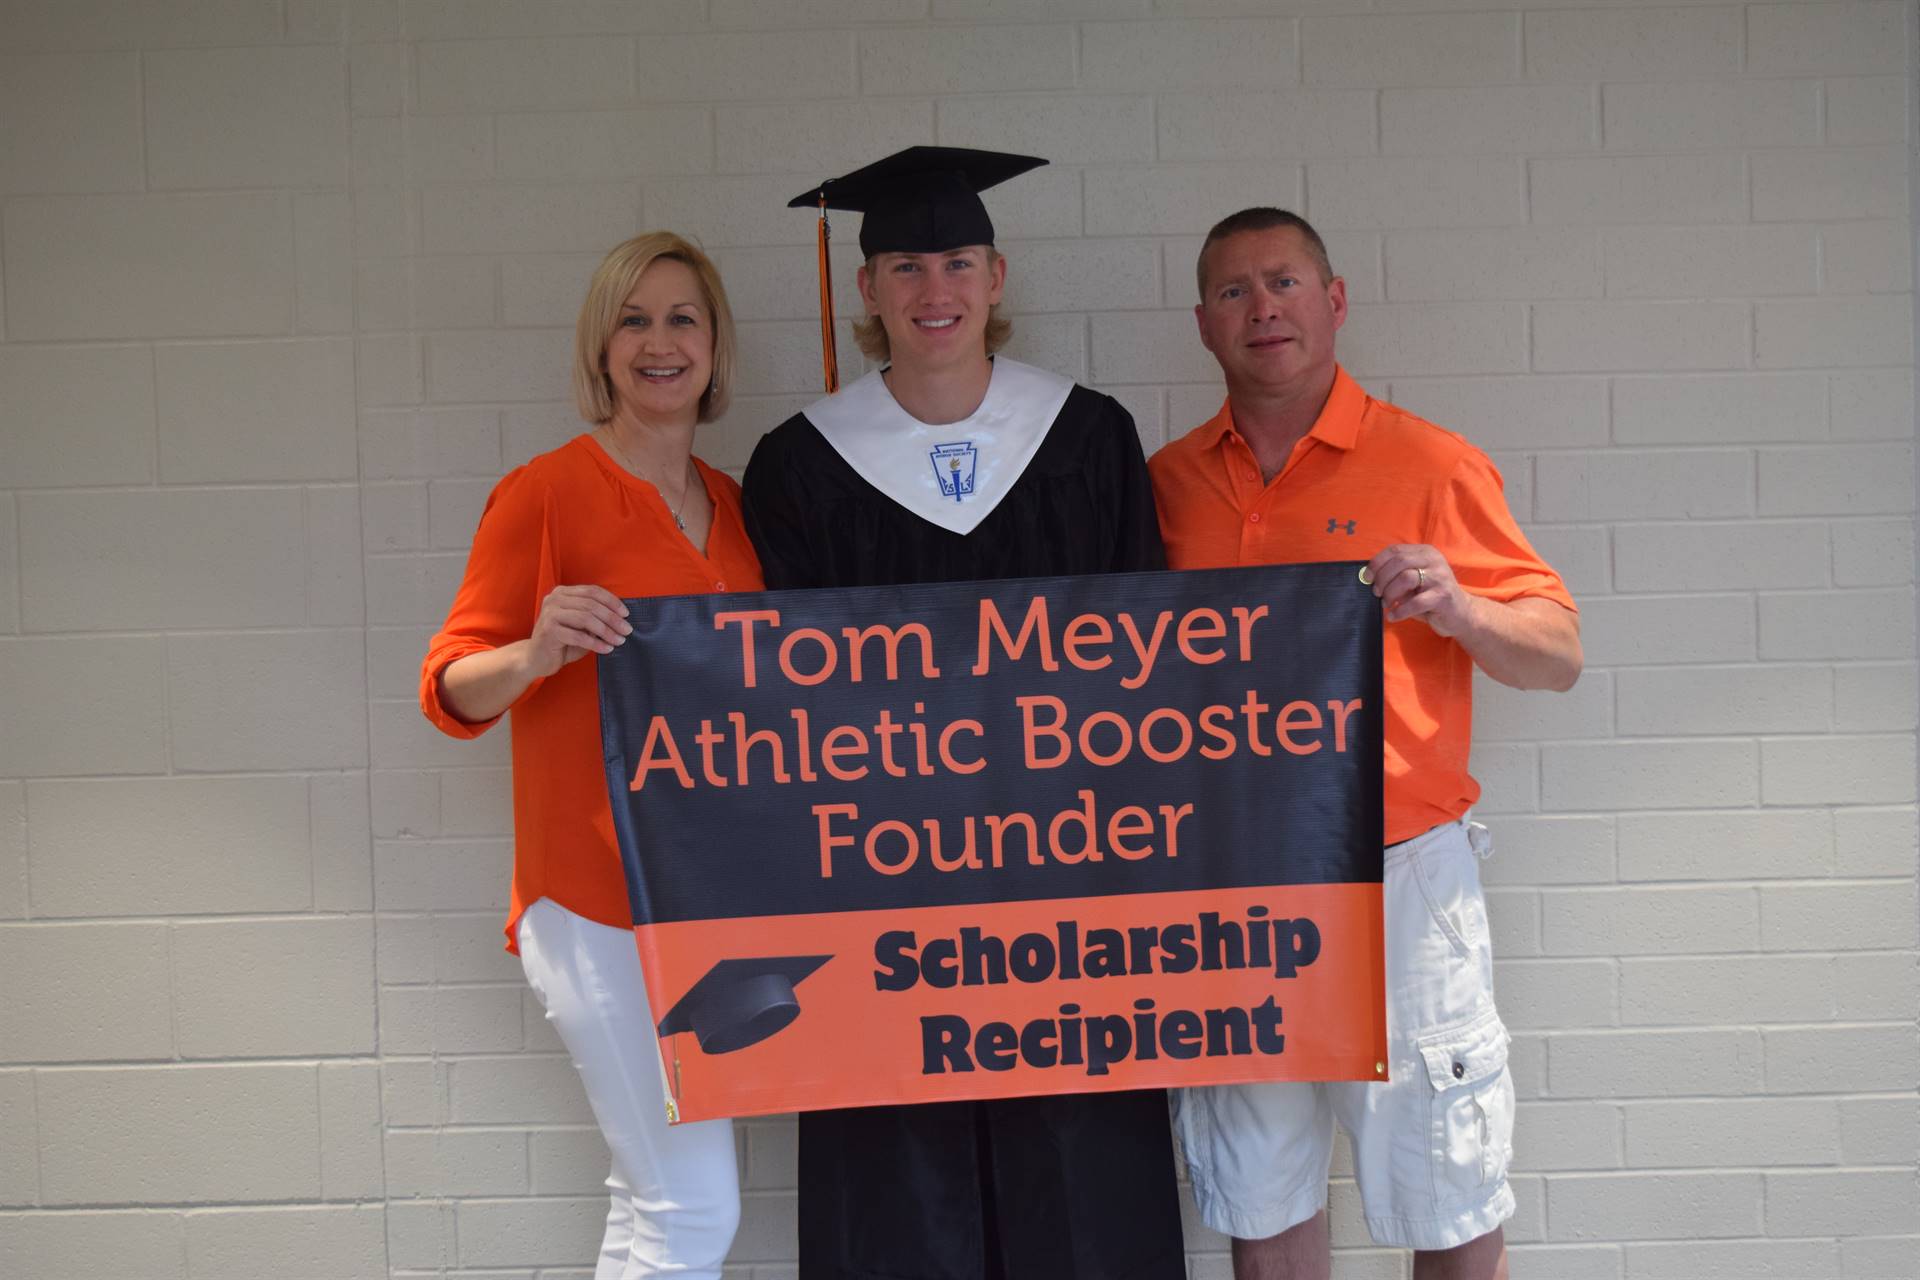 Jace MullenhourTom Meyer Athletic Booster Founder Scholarship